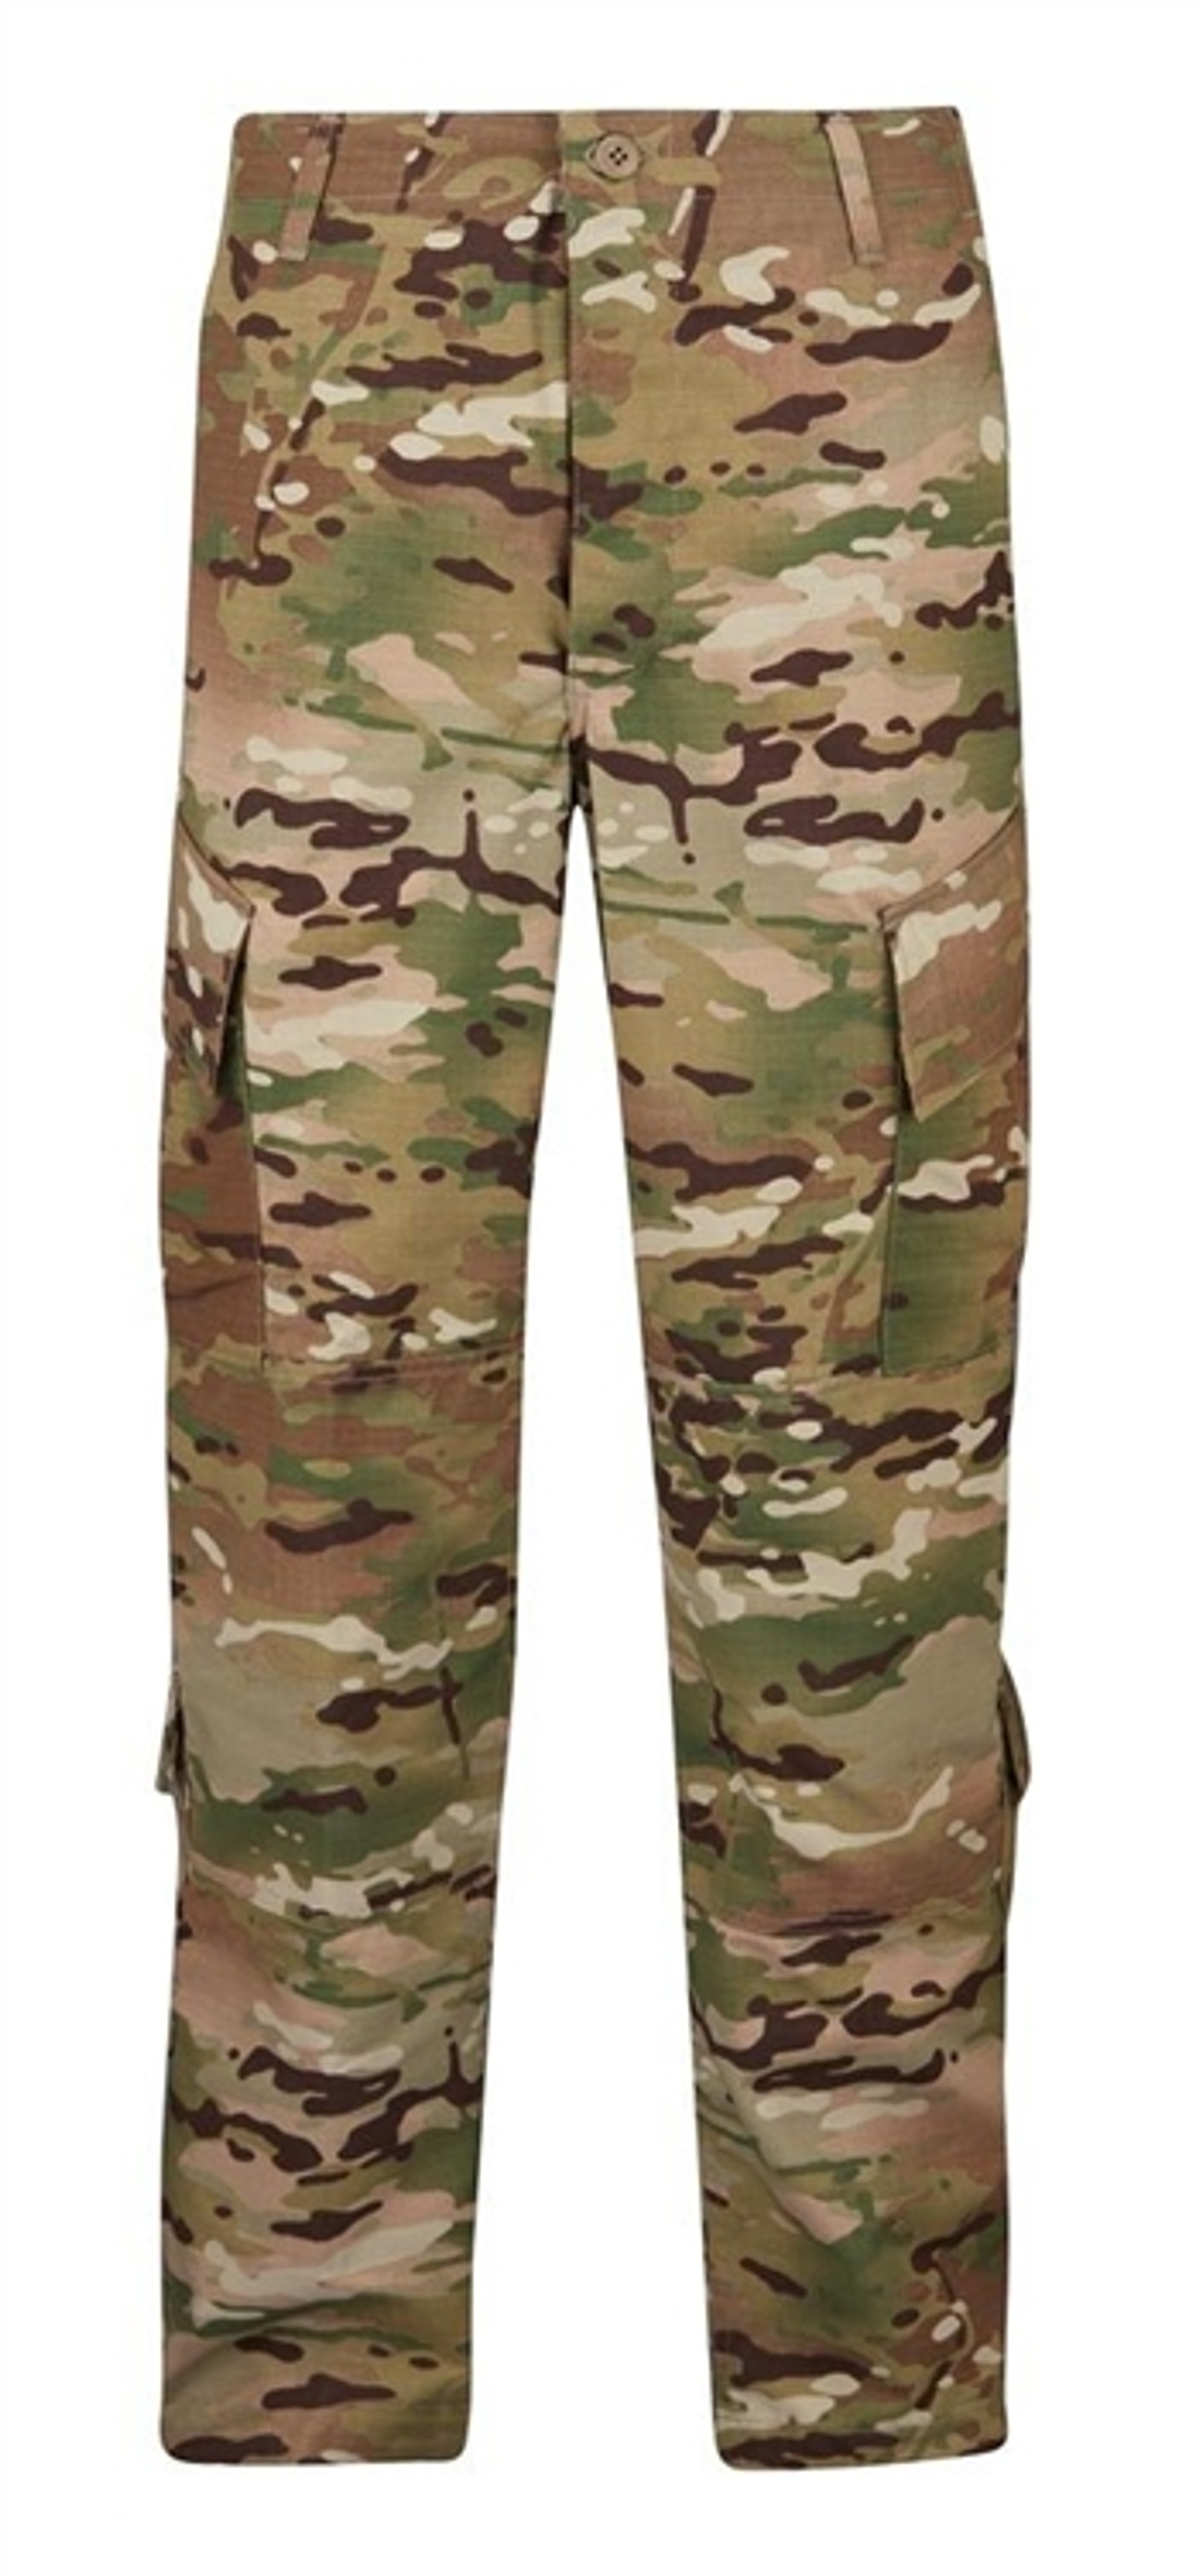 Clothing - Duty Uniforms - American Uniform - Military